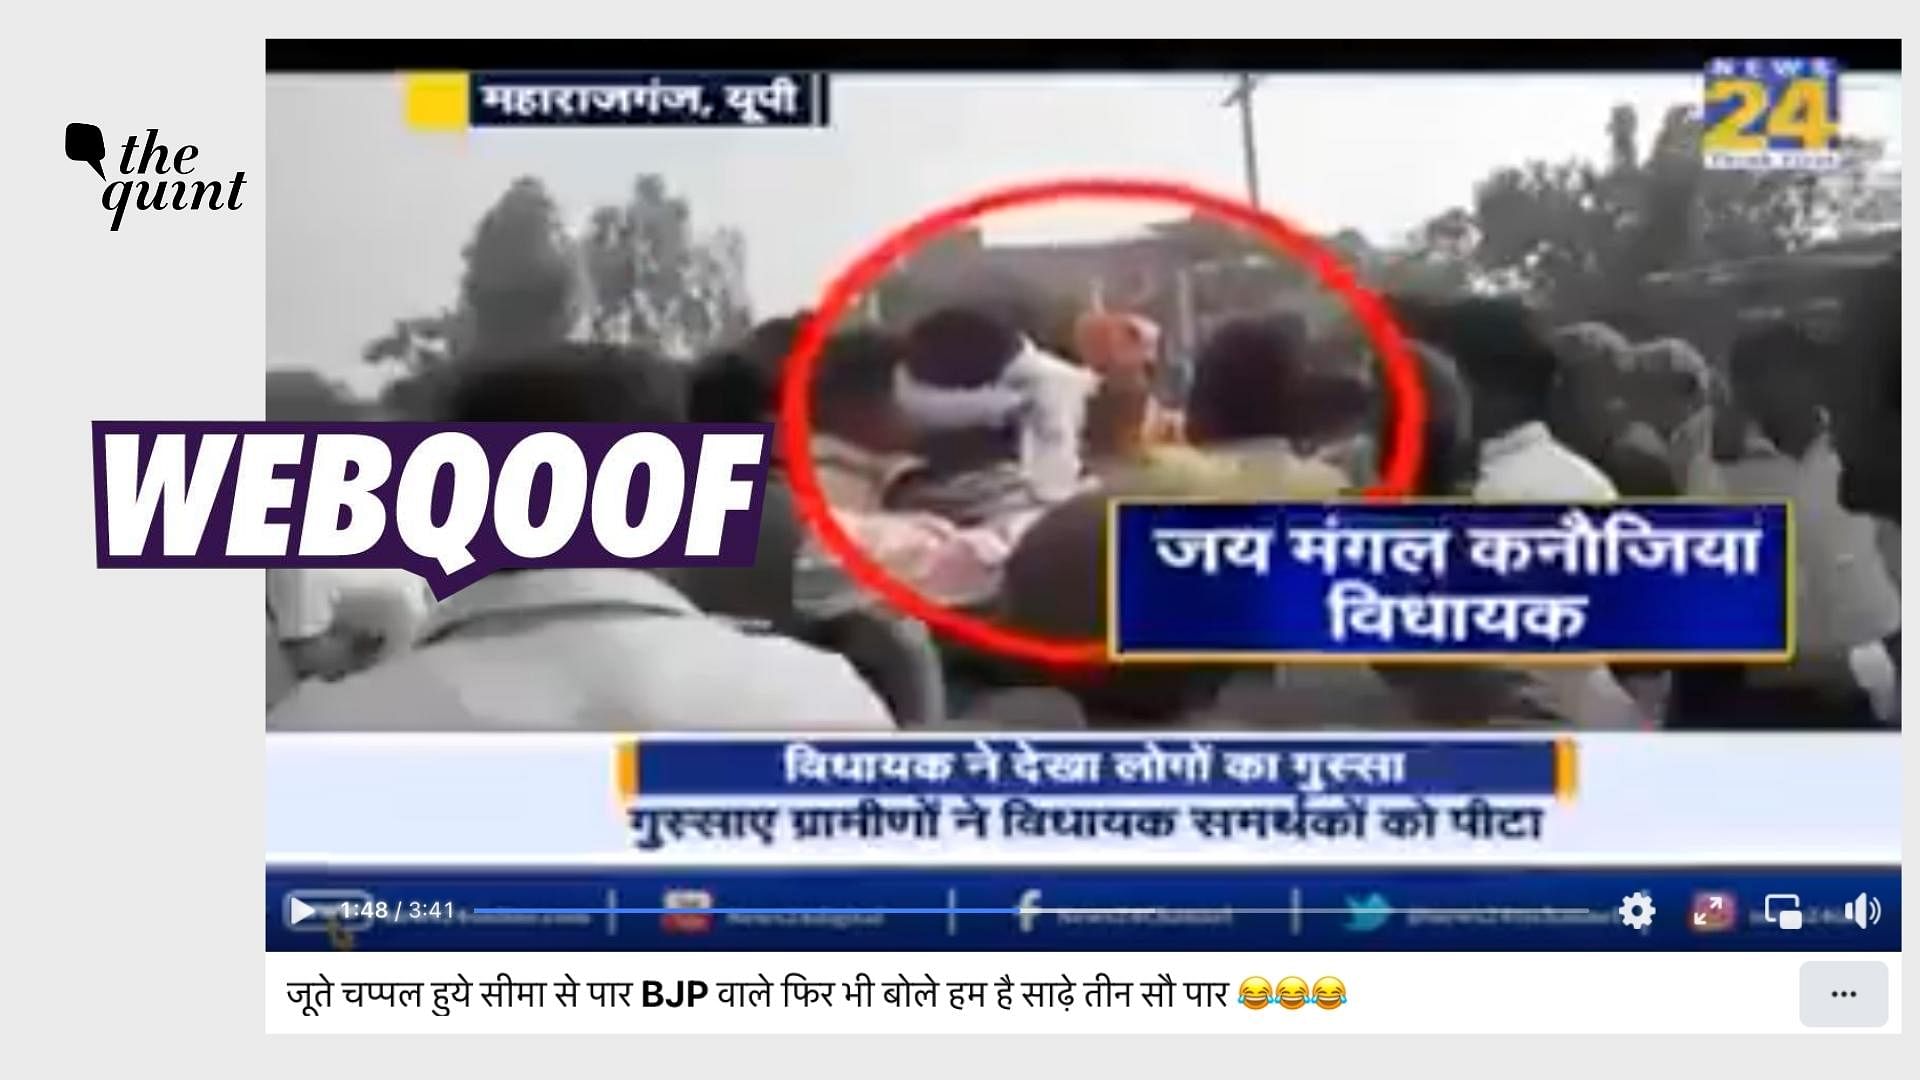 <div class="paragraphs"><p>The claim states that BJP MLA Jai Mangal Kanojiya was beaten up recently in Uttar Pradesh.</p></div>